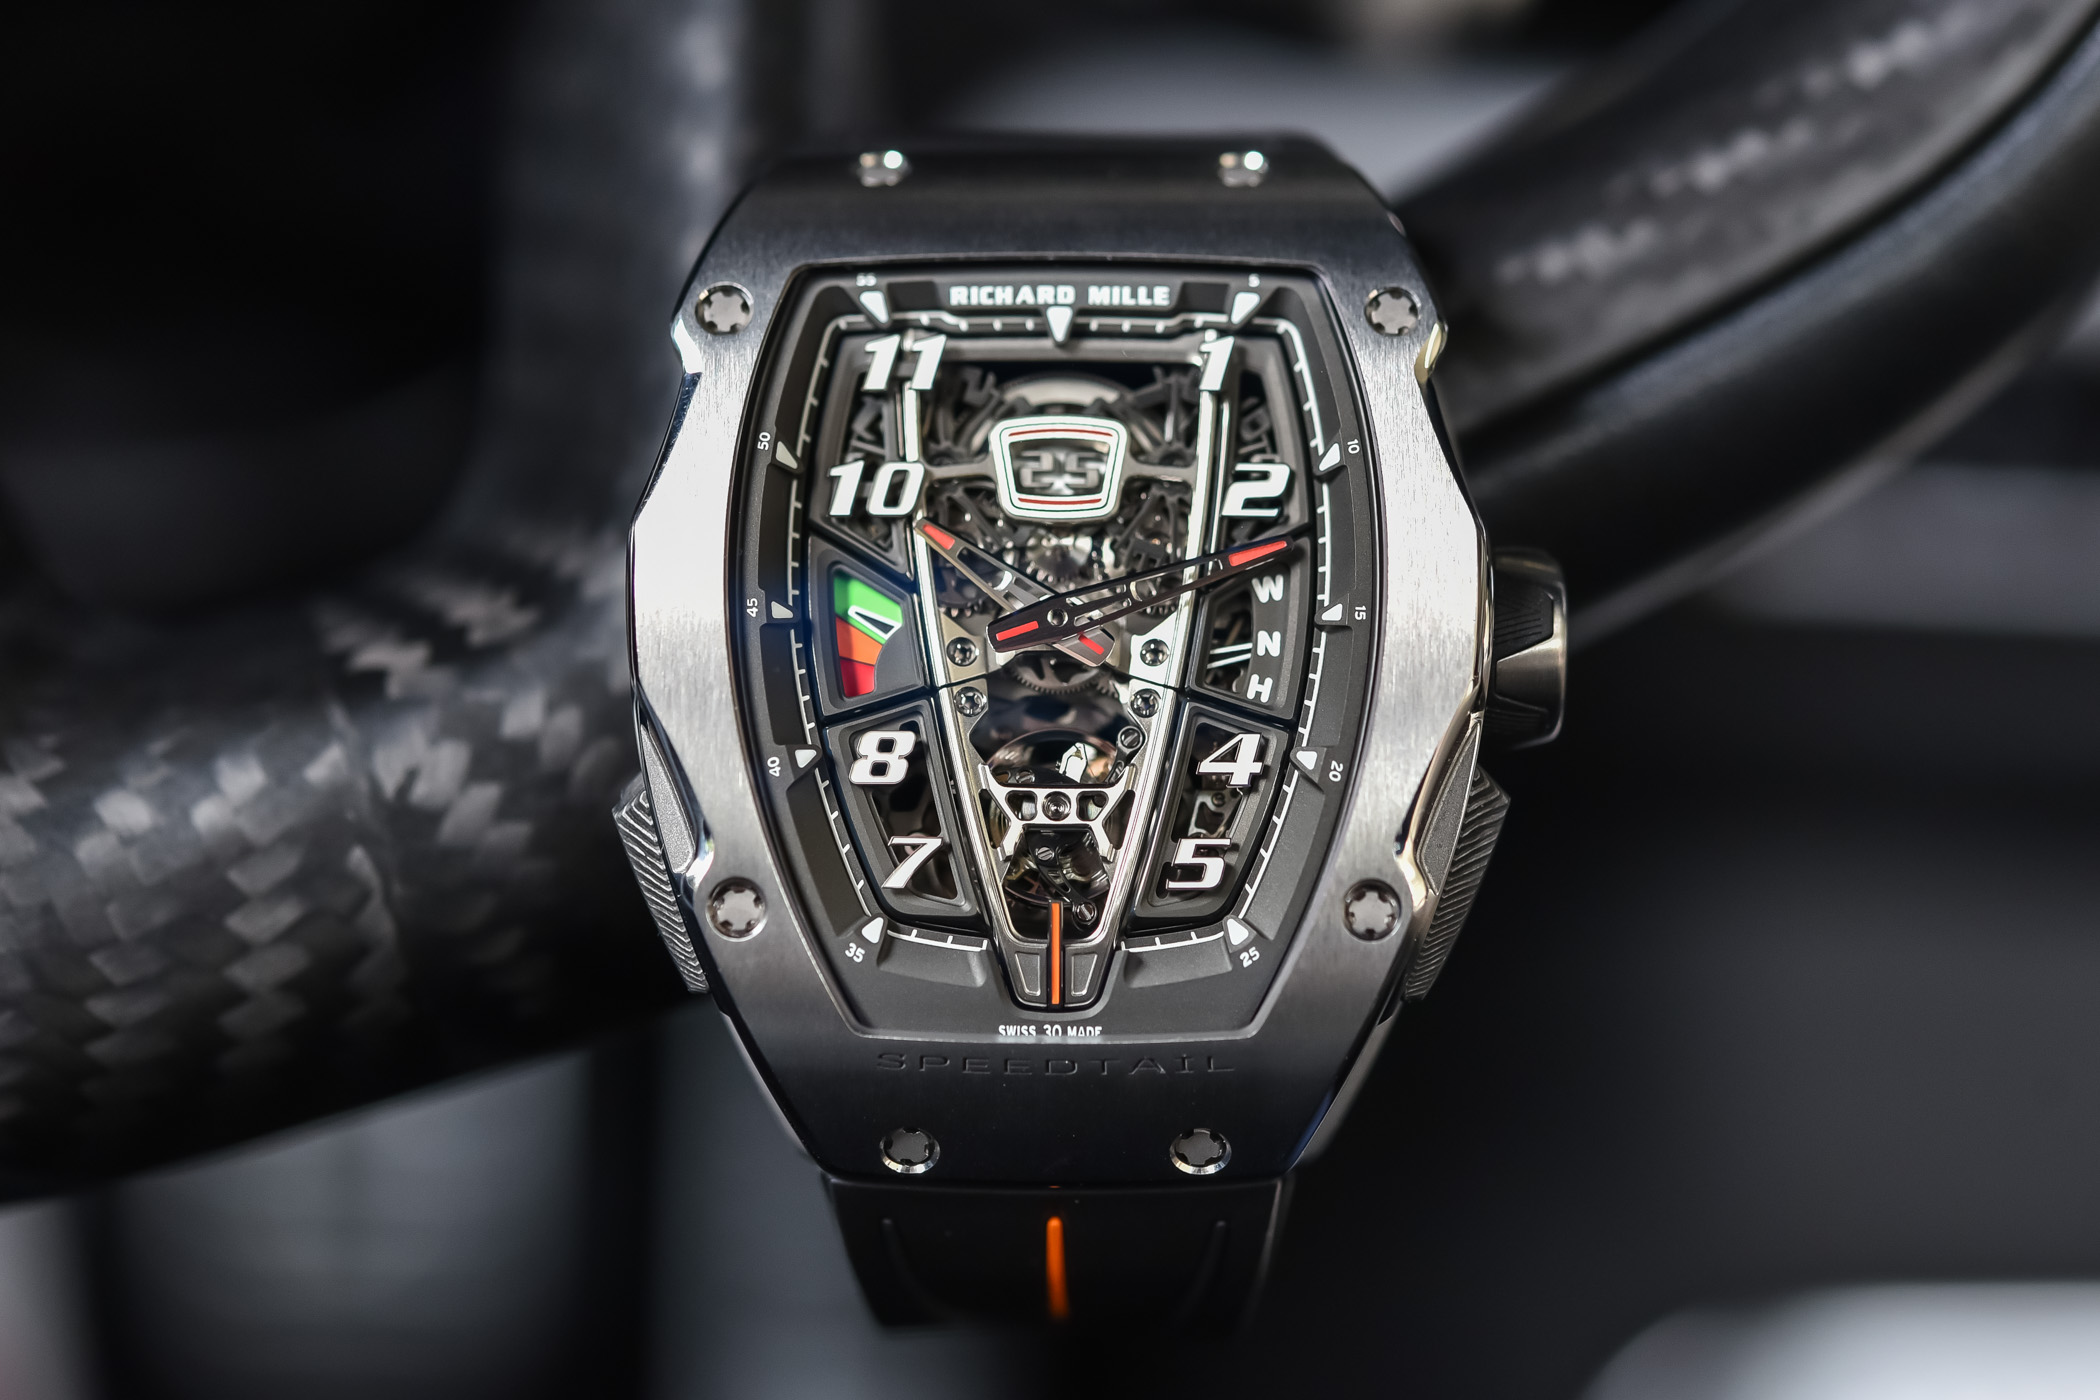 Richard-Mille-RM-40-01-Automatic-Winding-Tourbillon-McLaren-Speedtail-review-4